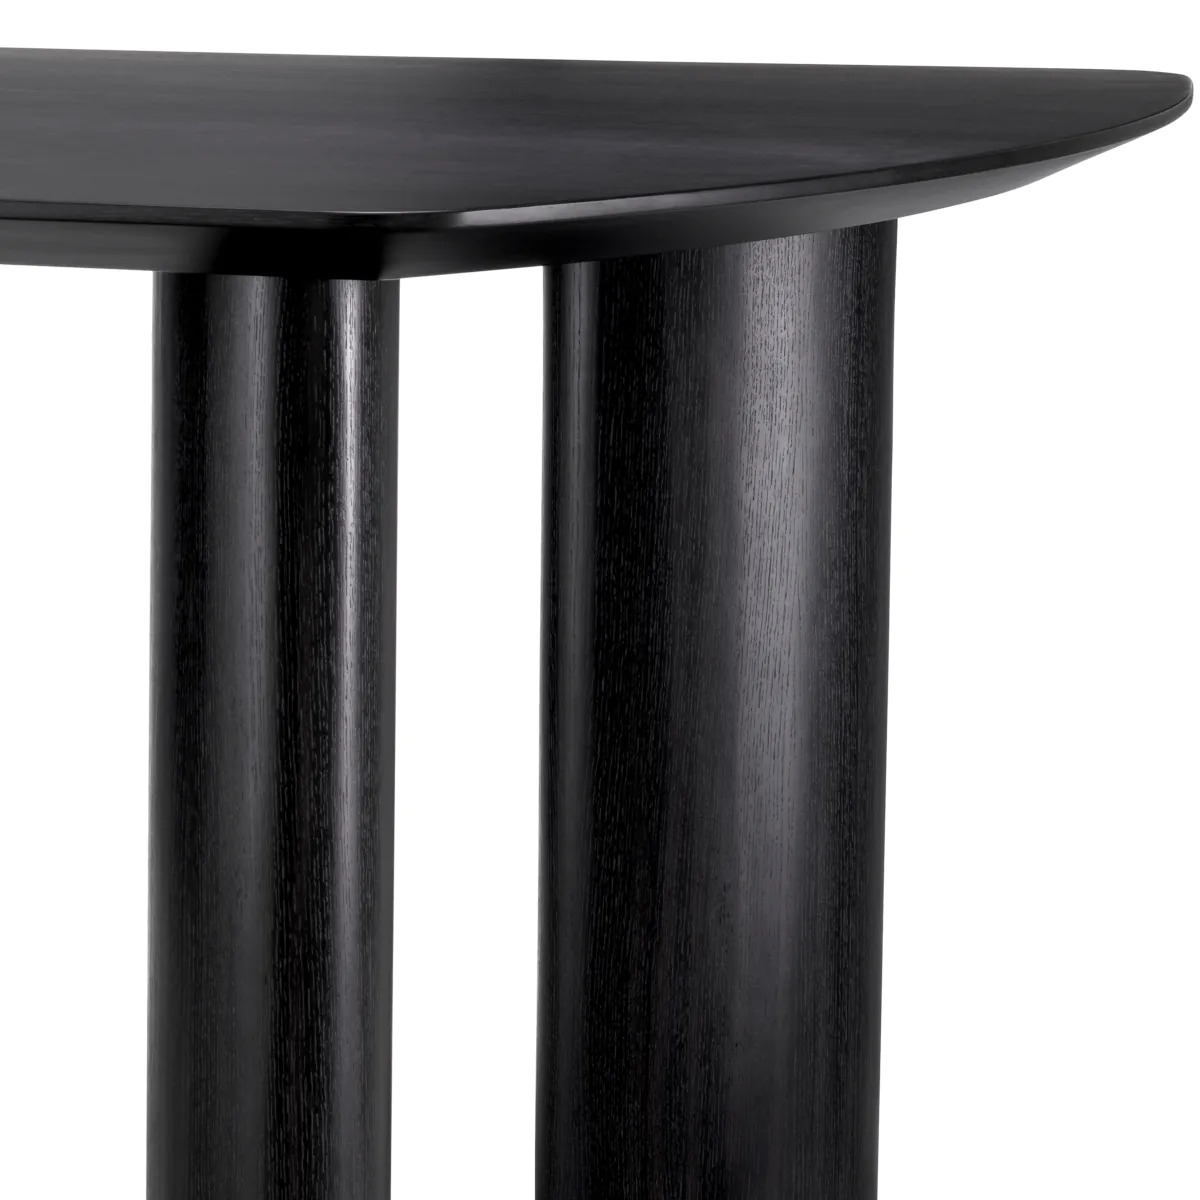 Bergman dining table